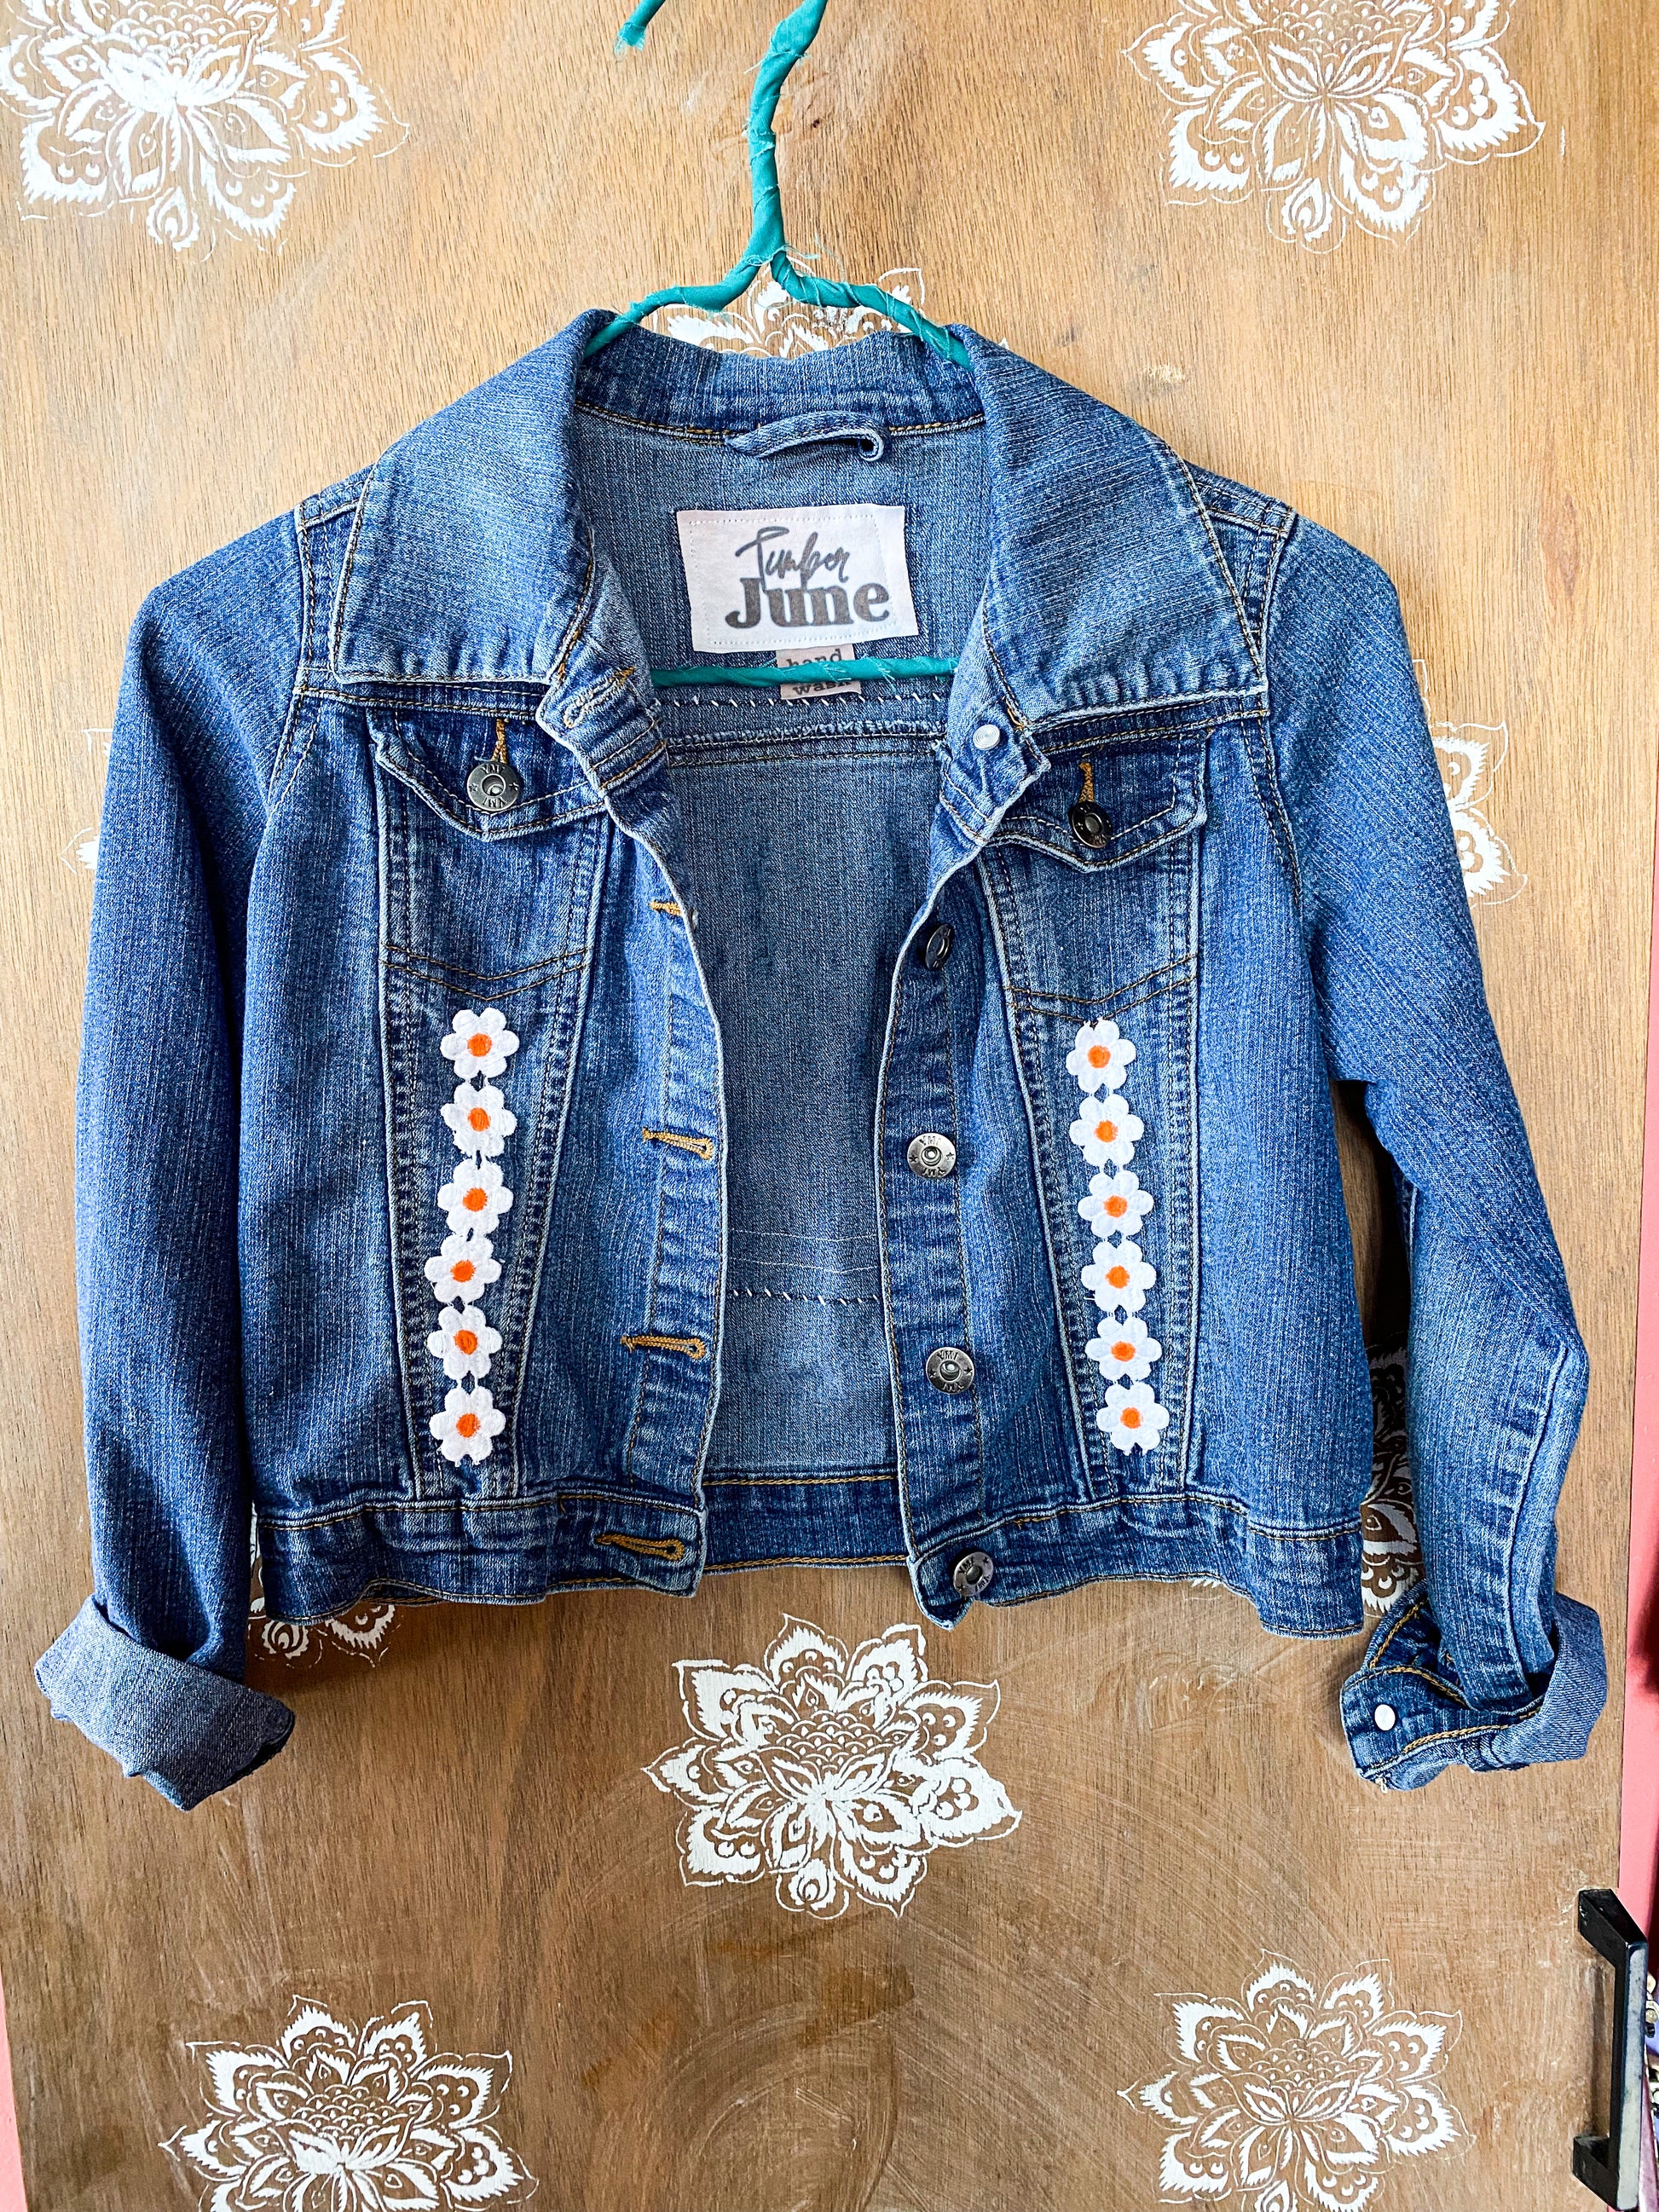 DIY Family Heirloom Denim Jacket with Spoonflower — M E G M A D E